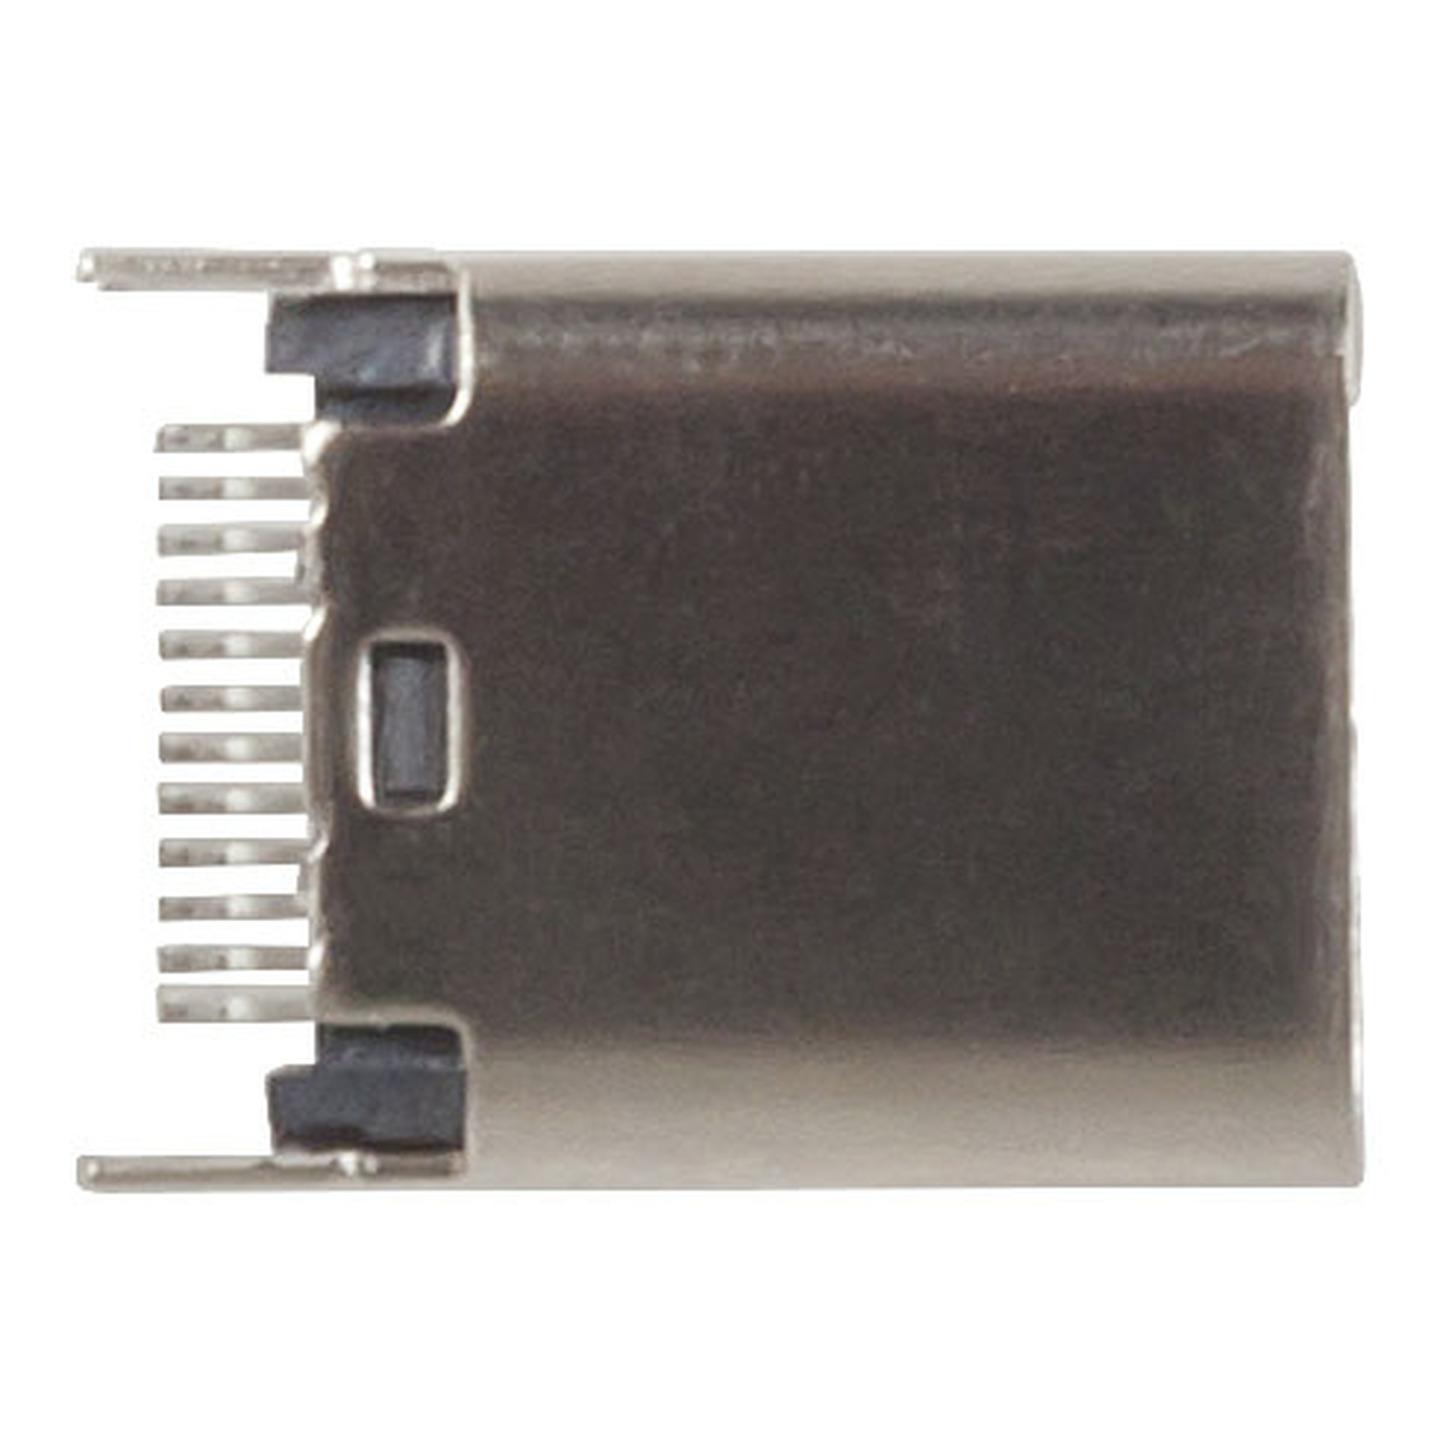 USB Plug PCB Mount Type C 2.0/3.0/3.1